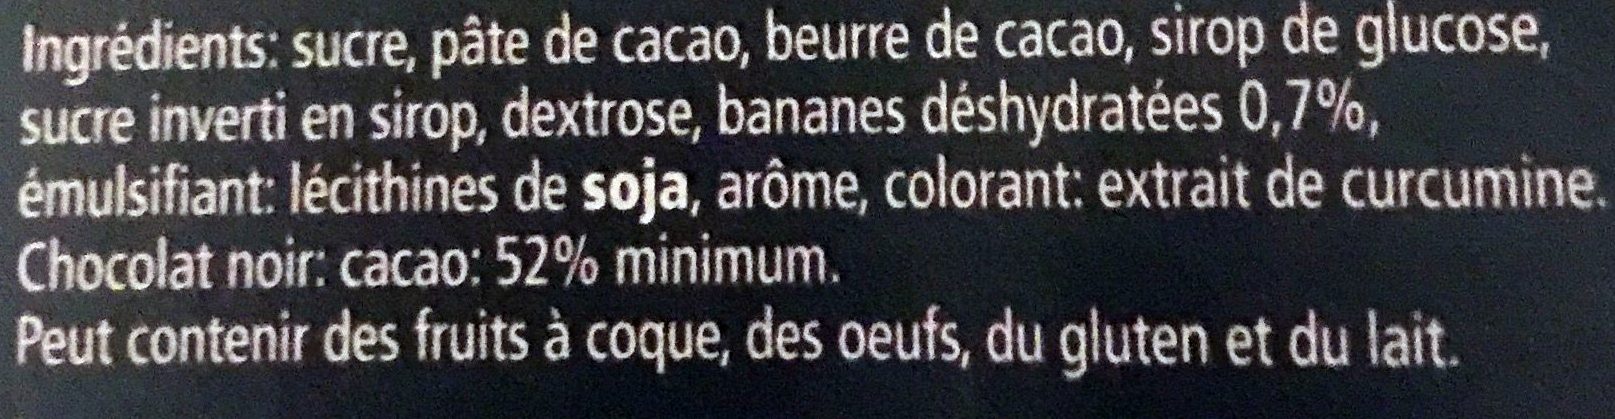 chocolat a la banane - Ingrédients